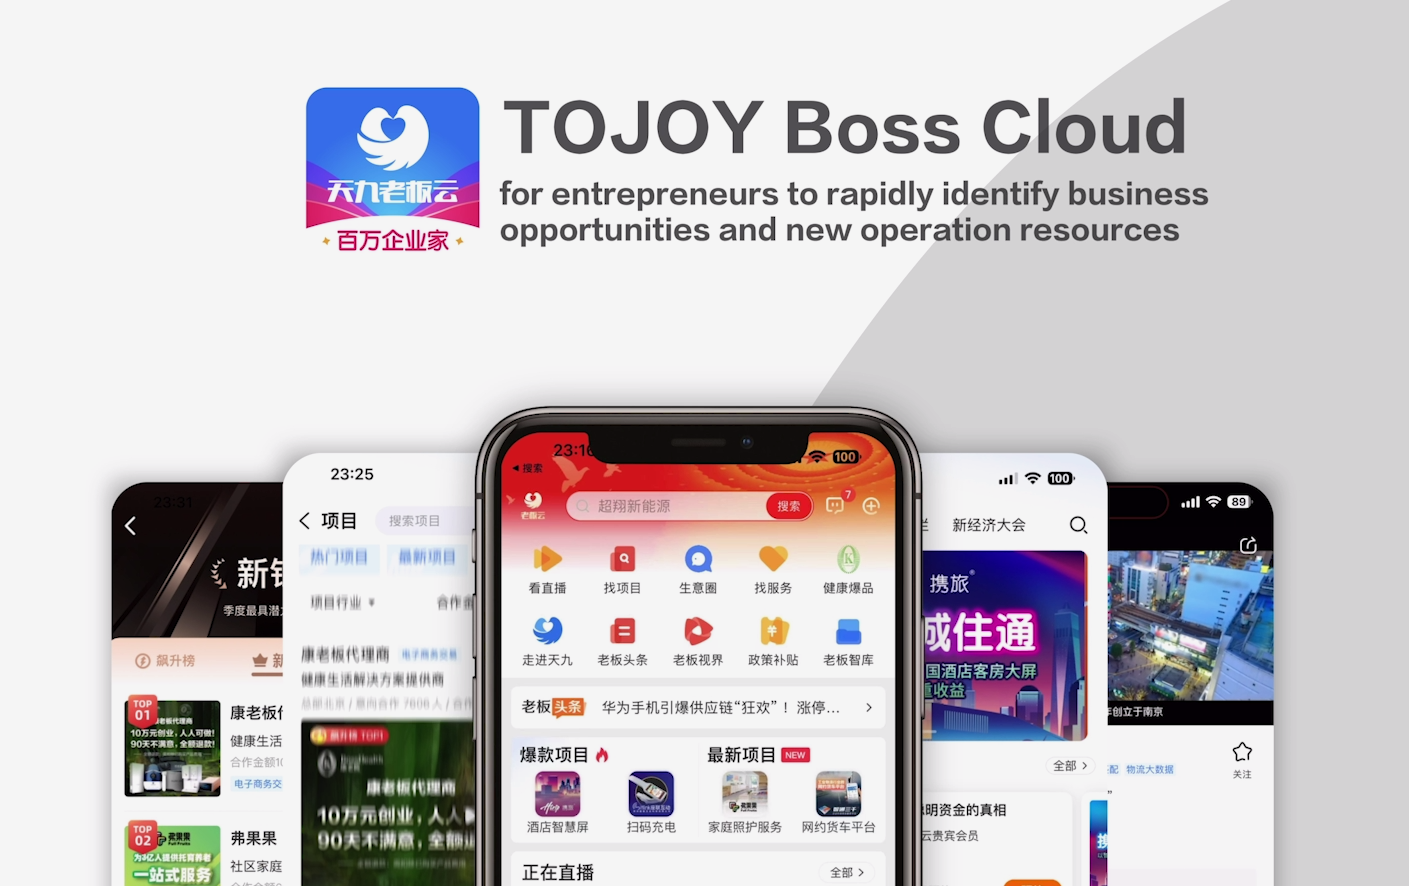 TOJOY Boss Cloud Hits 4.5 Million Users